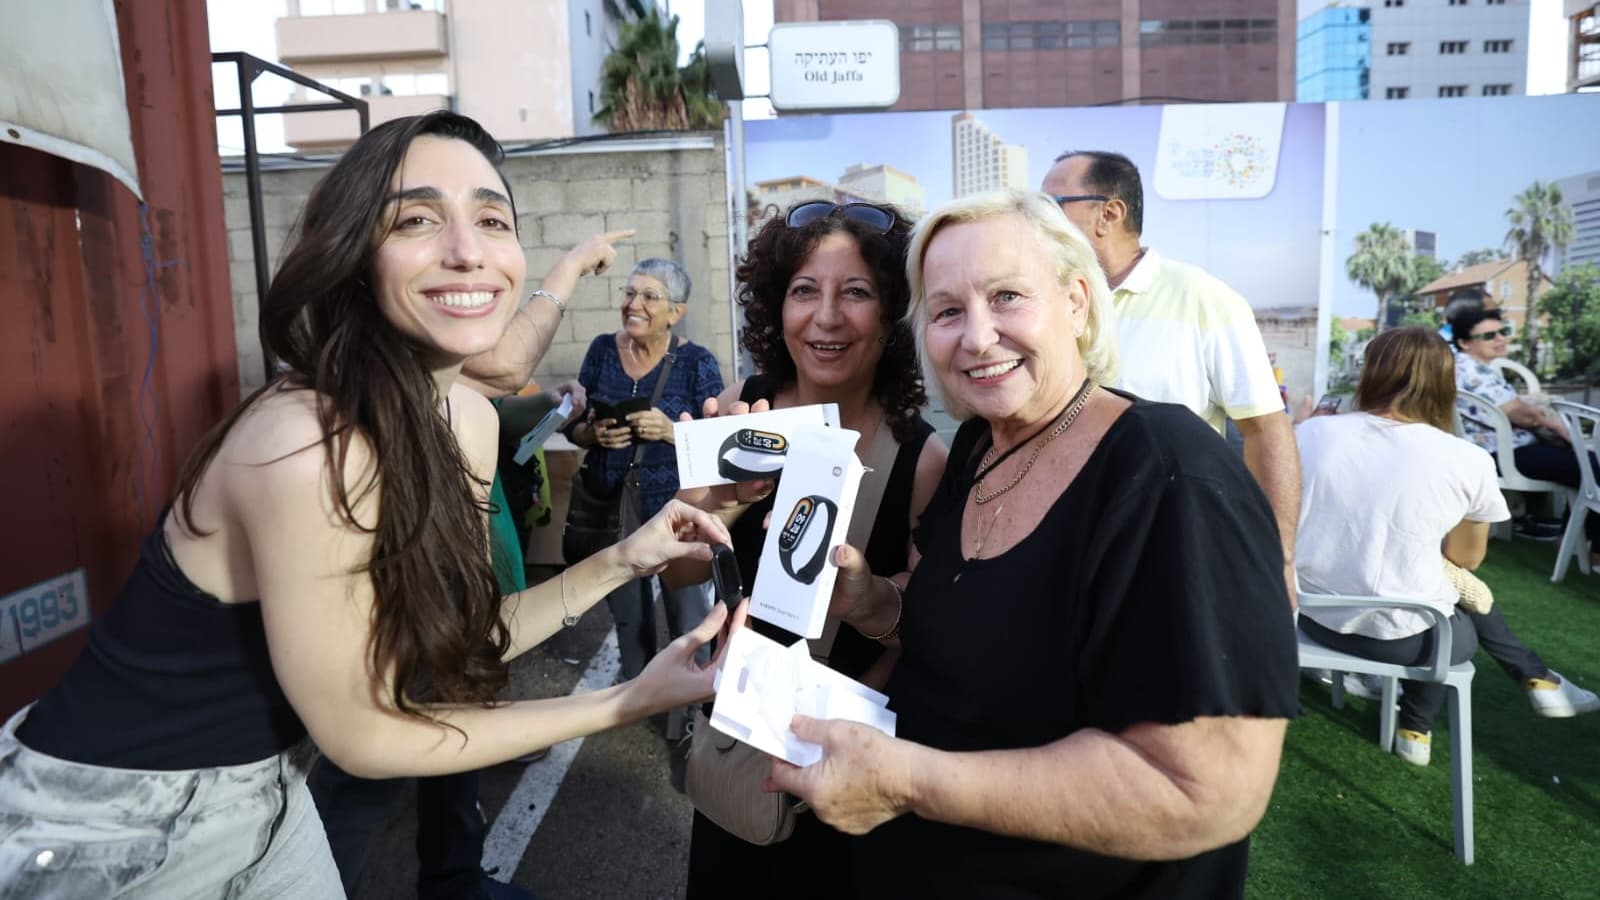 Shani Bibi distributing Xiaomi 8 smartwatches to the Tel Aviv deaf community. Photo by Shlomi Yosef